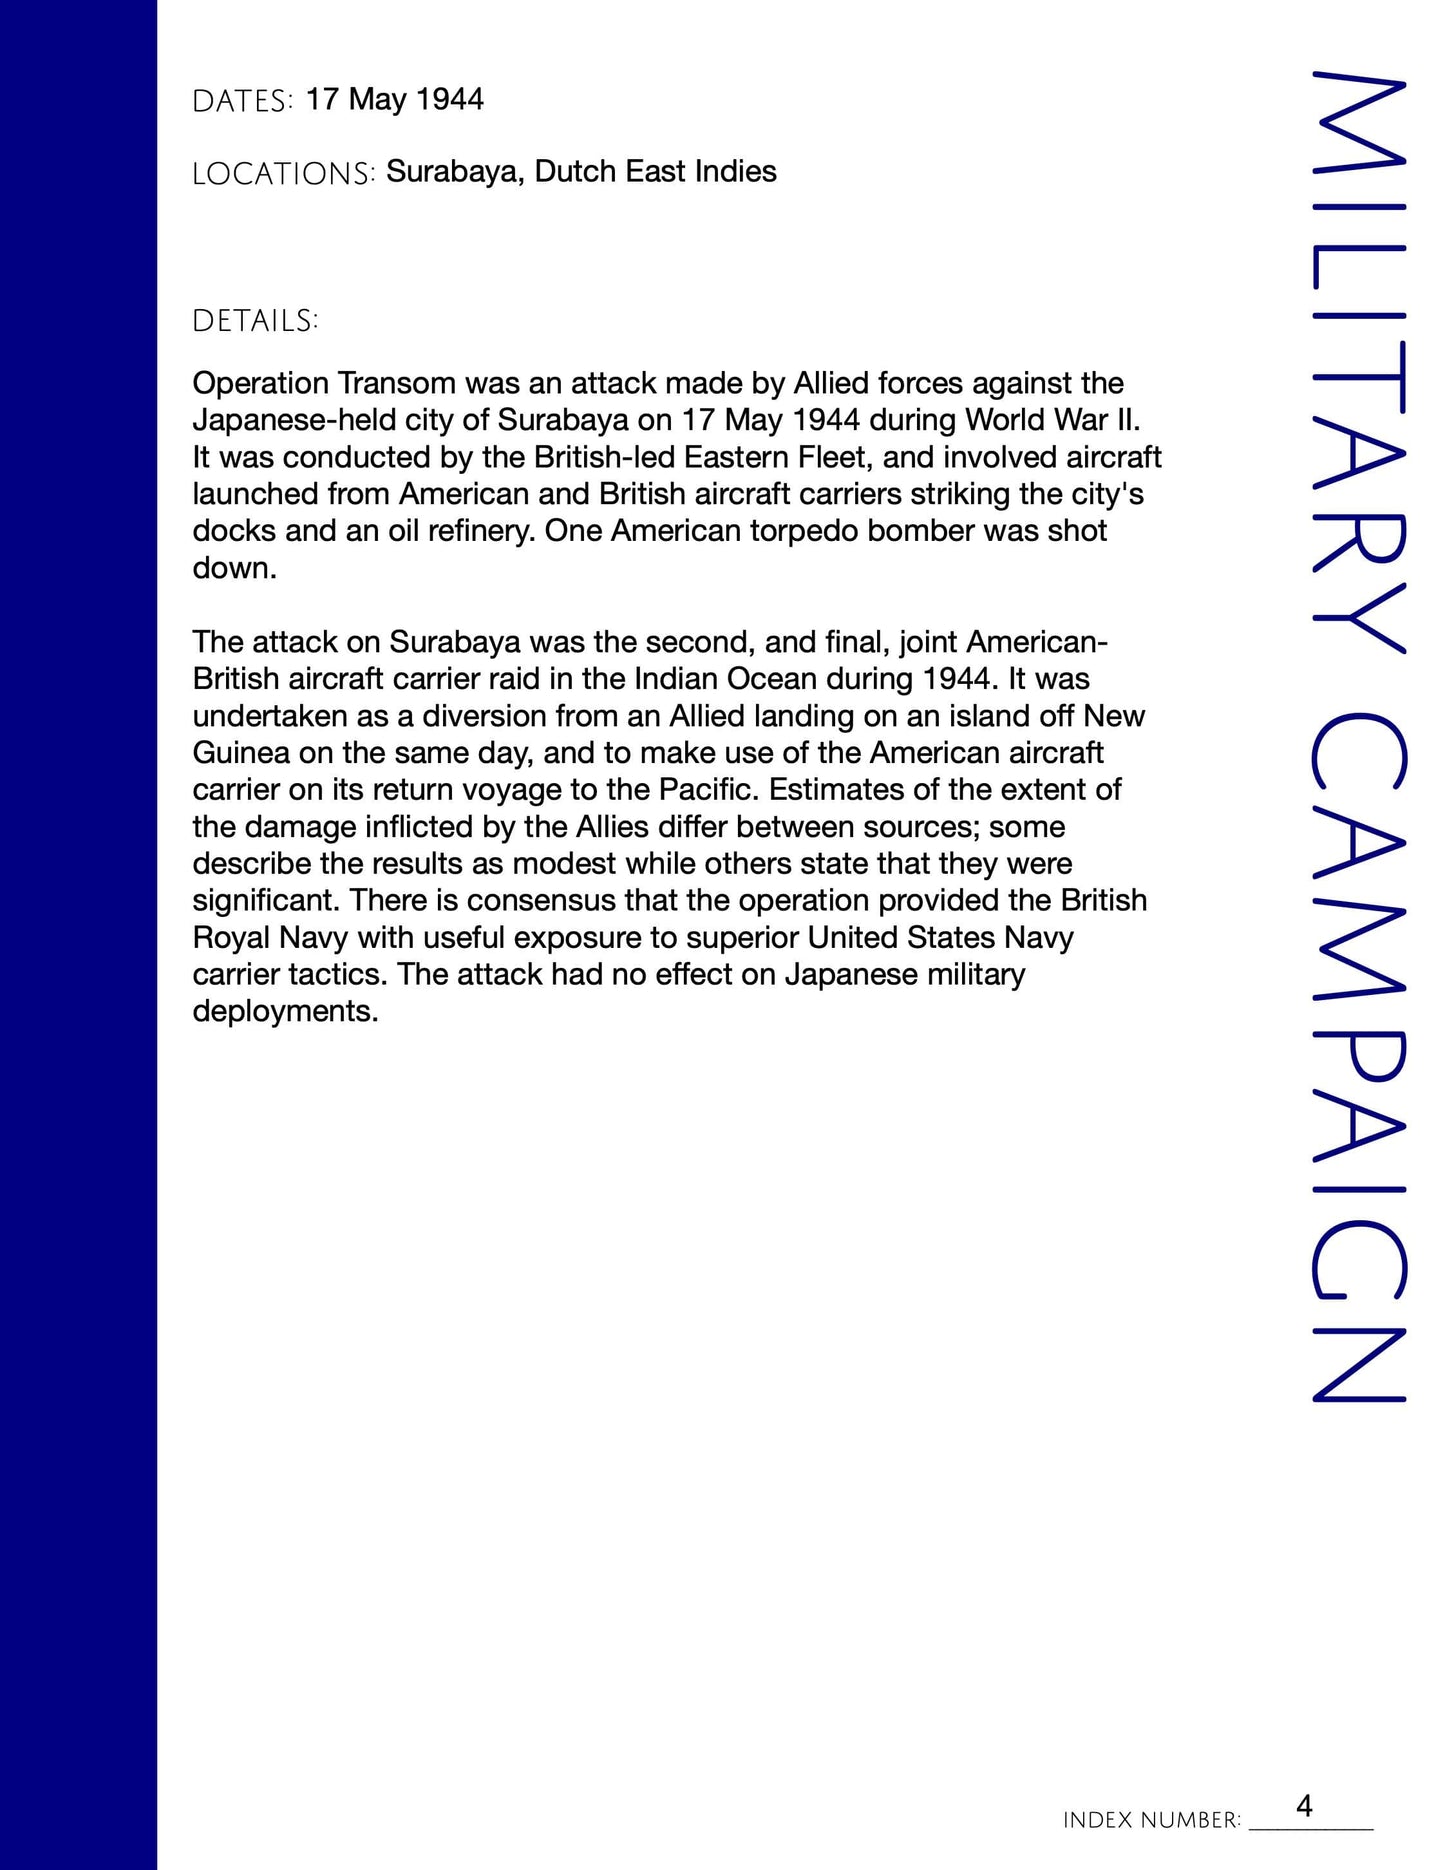 Military Campaign: Printable Genealogy Form (Digital Download)